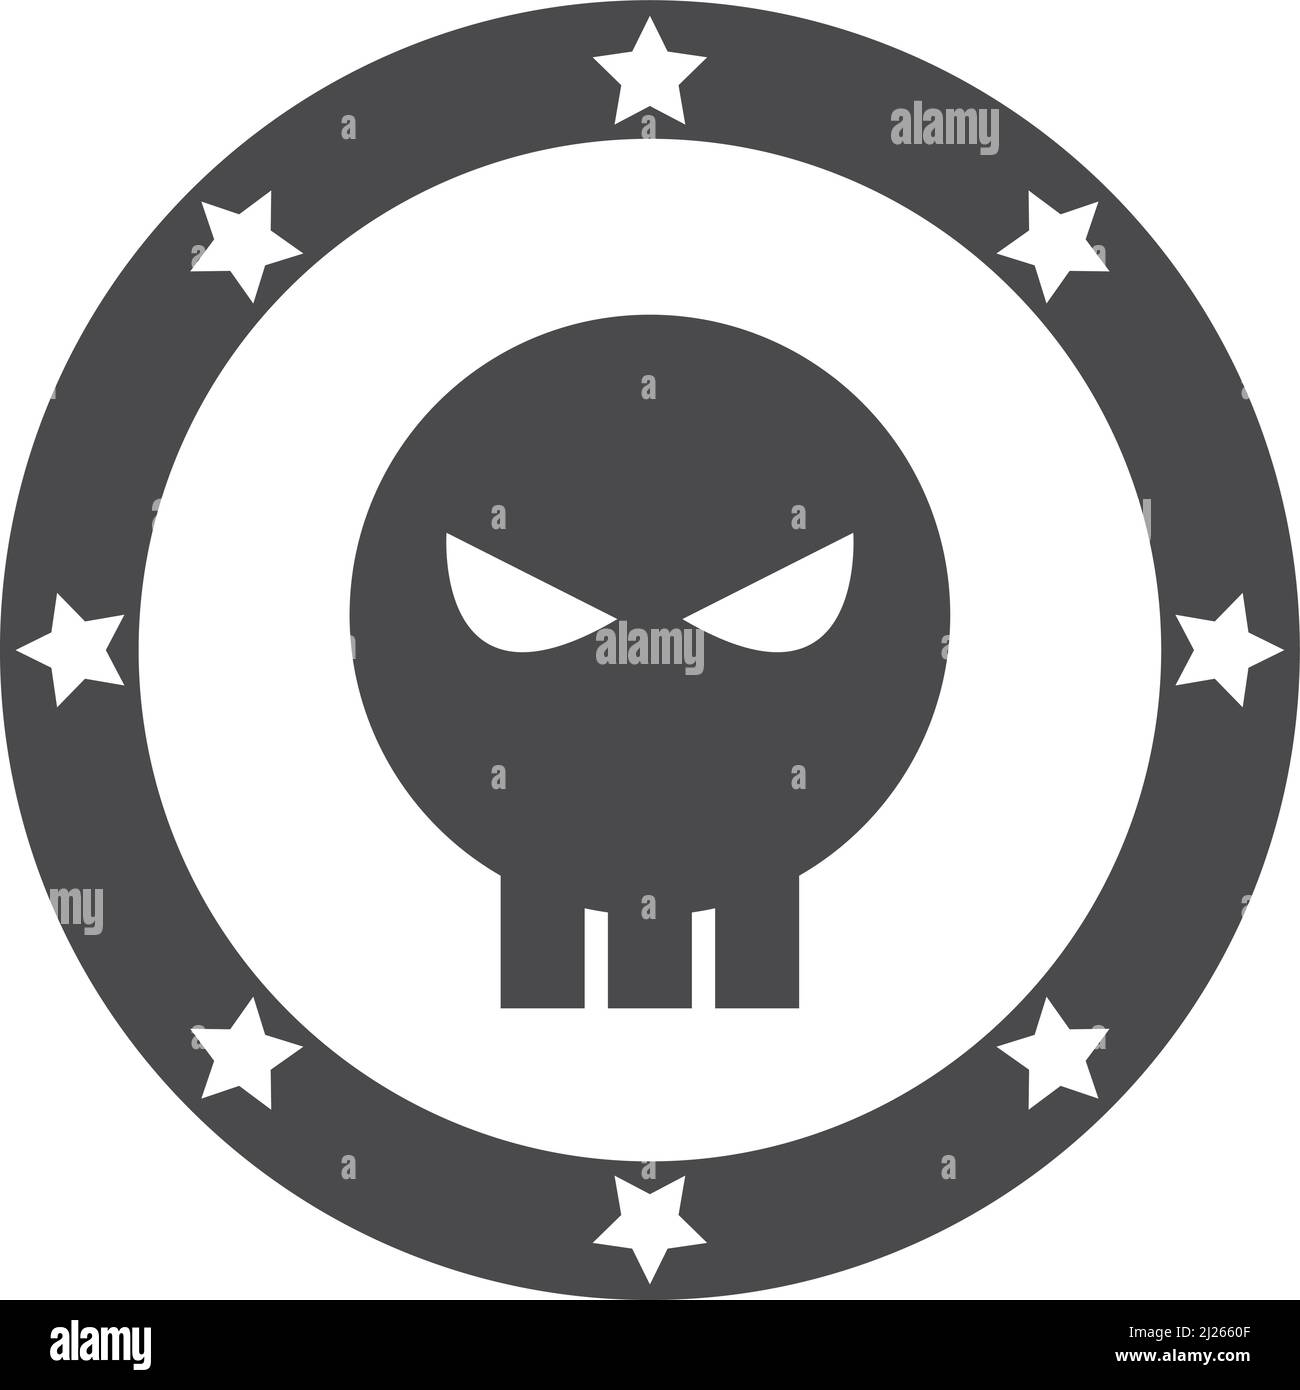 Böses Comic-Emblem. Schwarzes Schild des Superschurken Stock Vektor